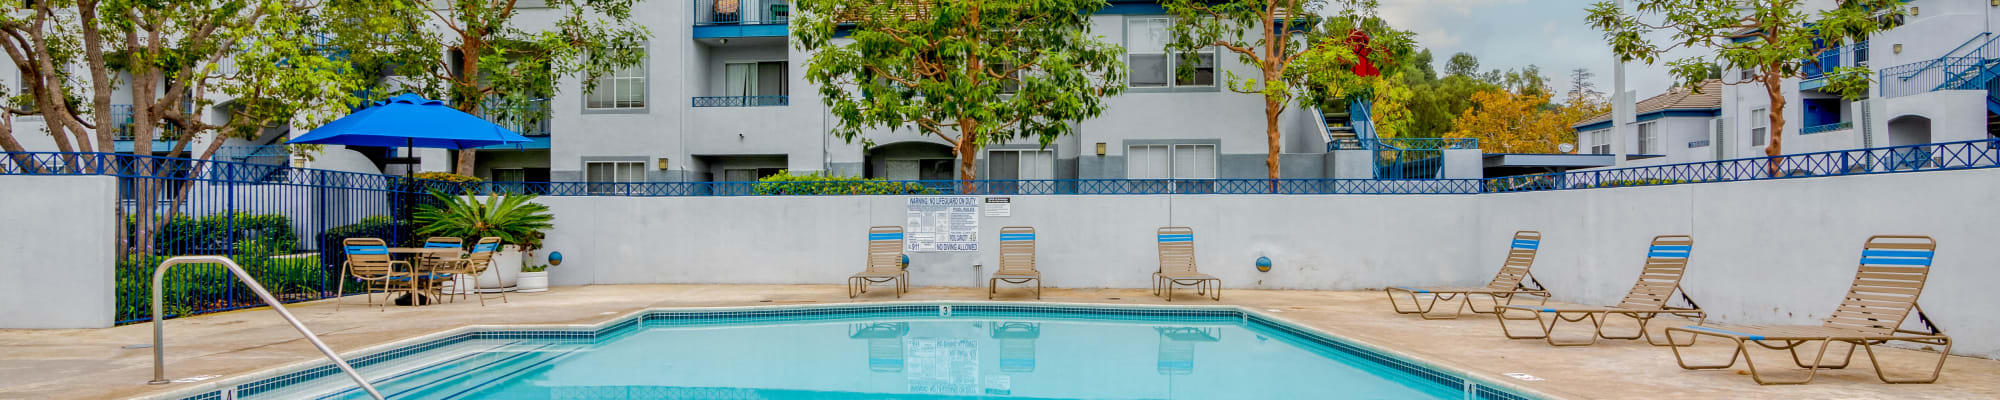 Affordable Program | Woodpark Apartments in Aliso Viejo, California